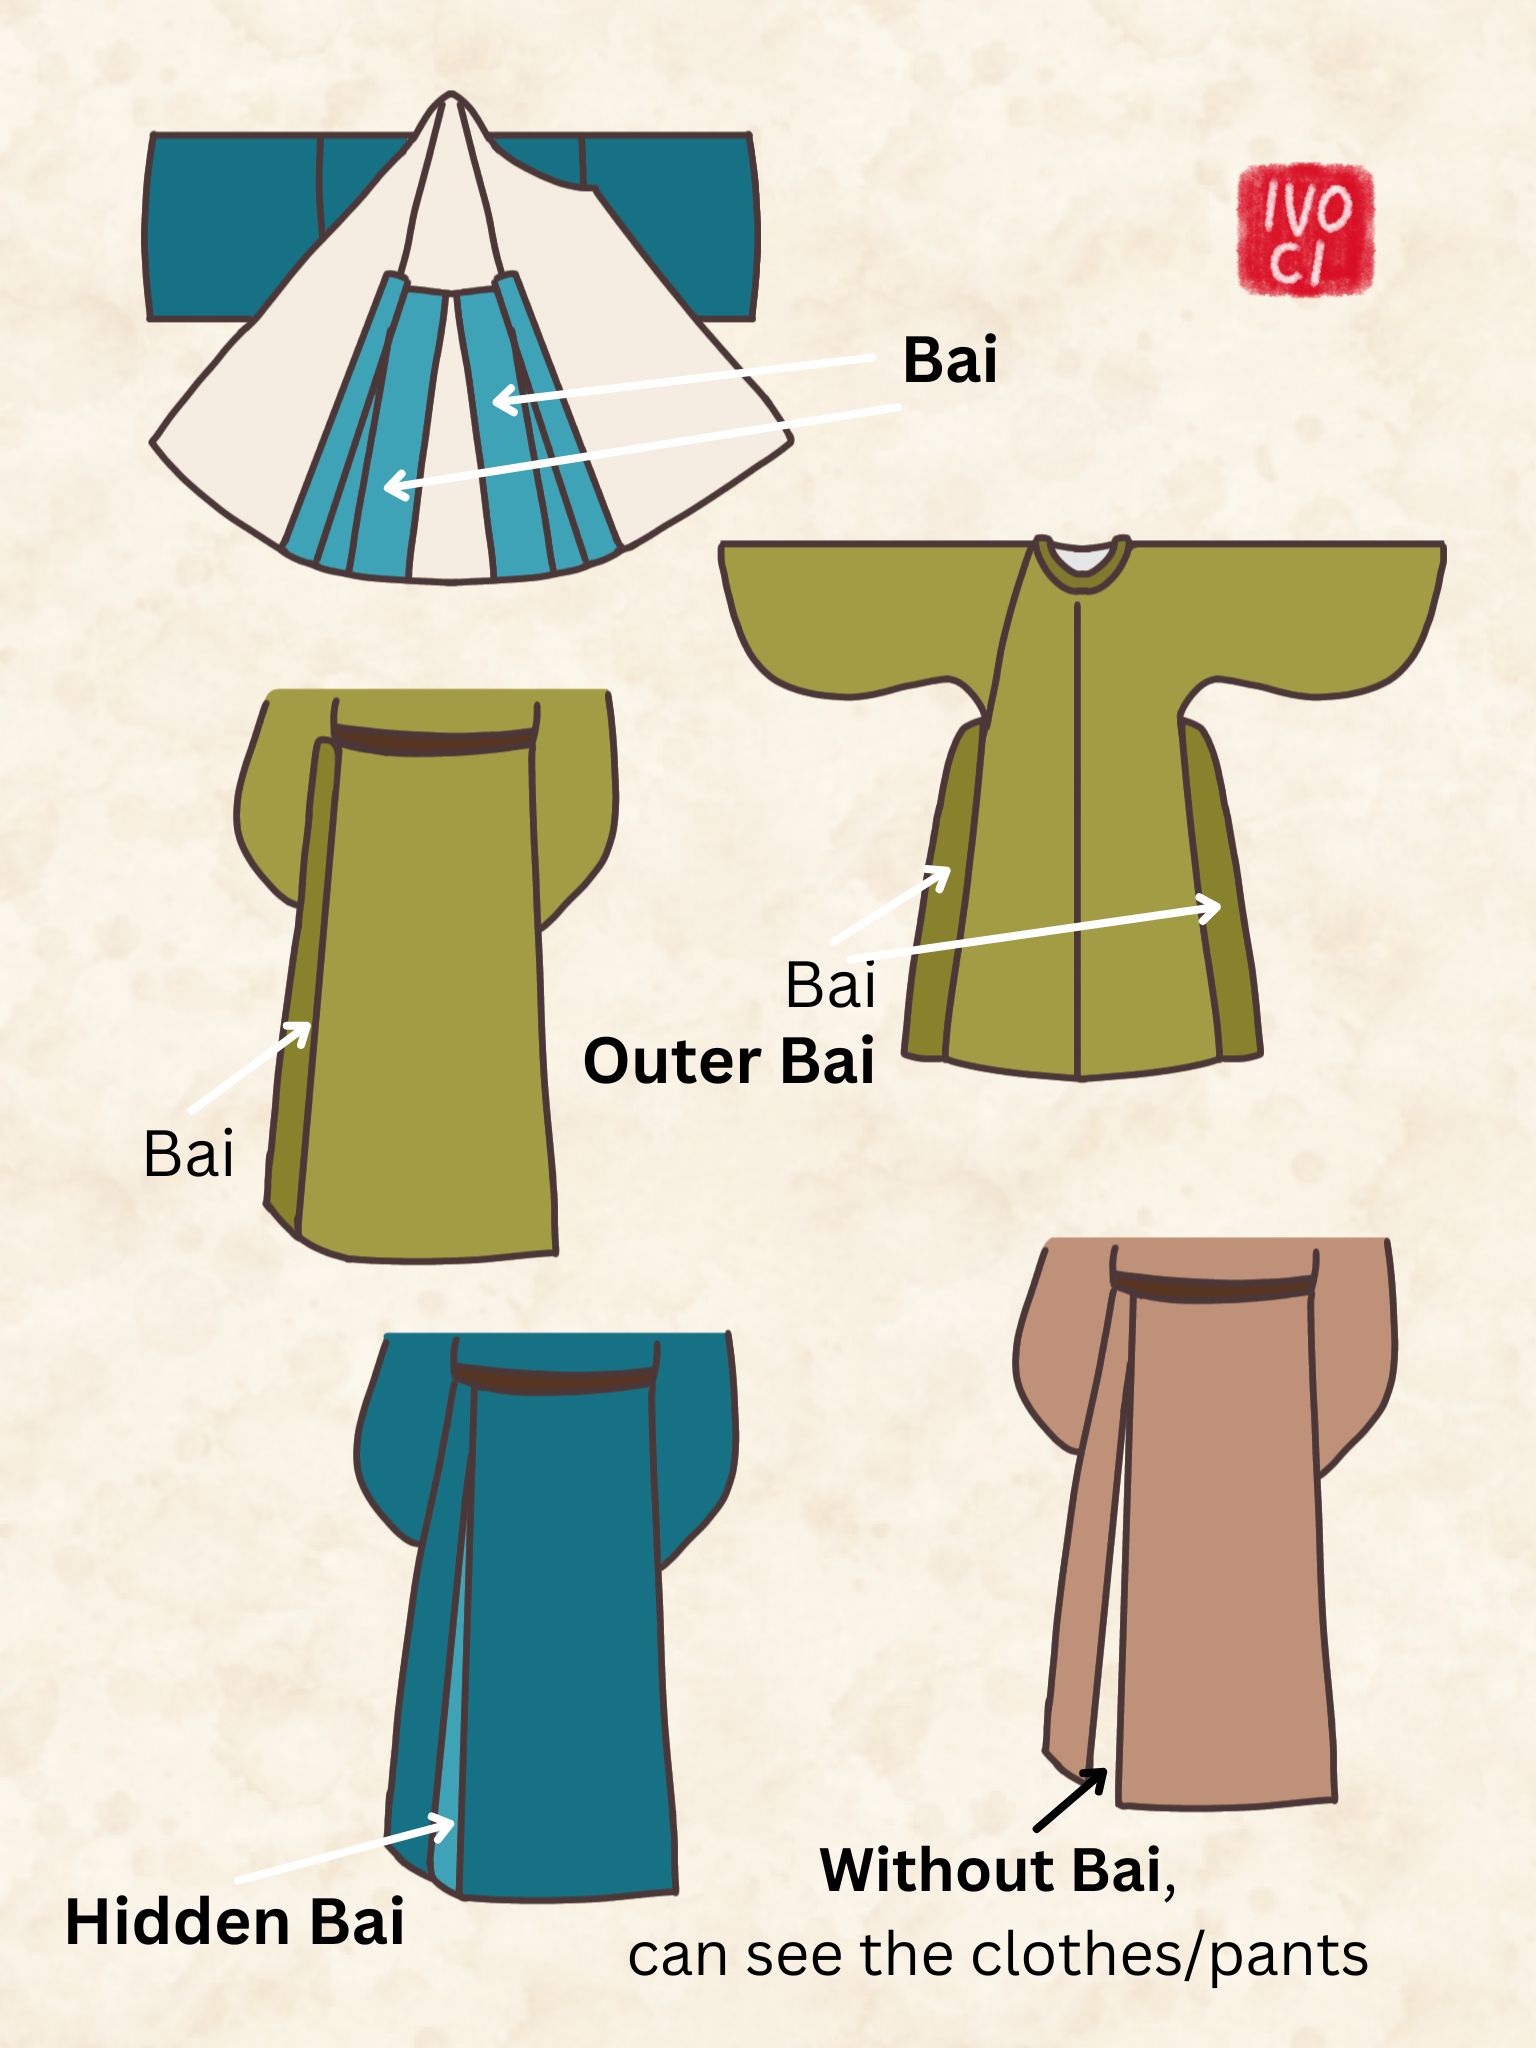 ivoci - Daopao 道袍, Ming Dynasty Style Hanfu Robe - 3